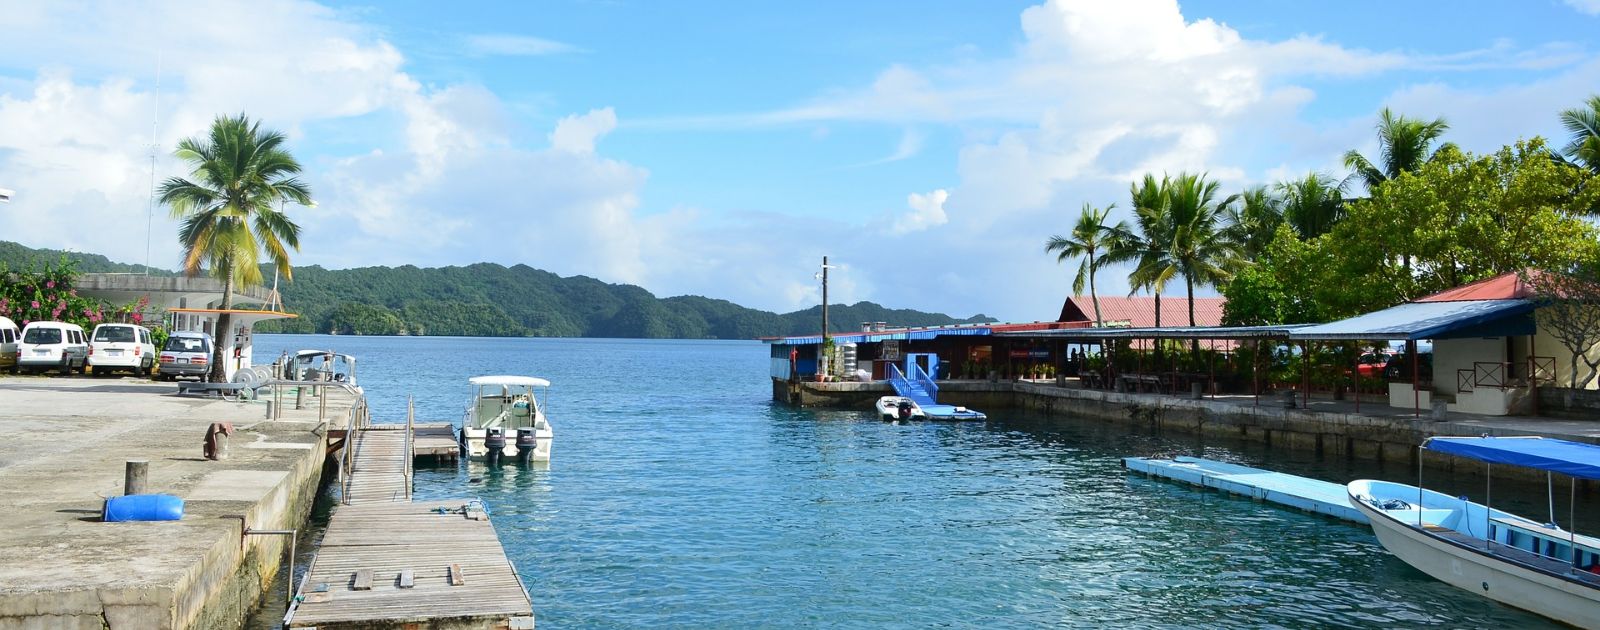 life scene in Micronesia